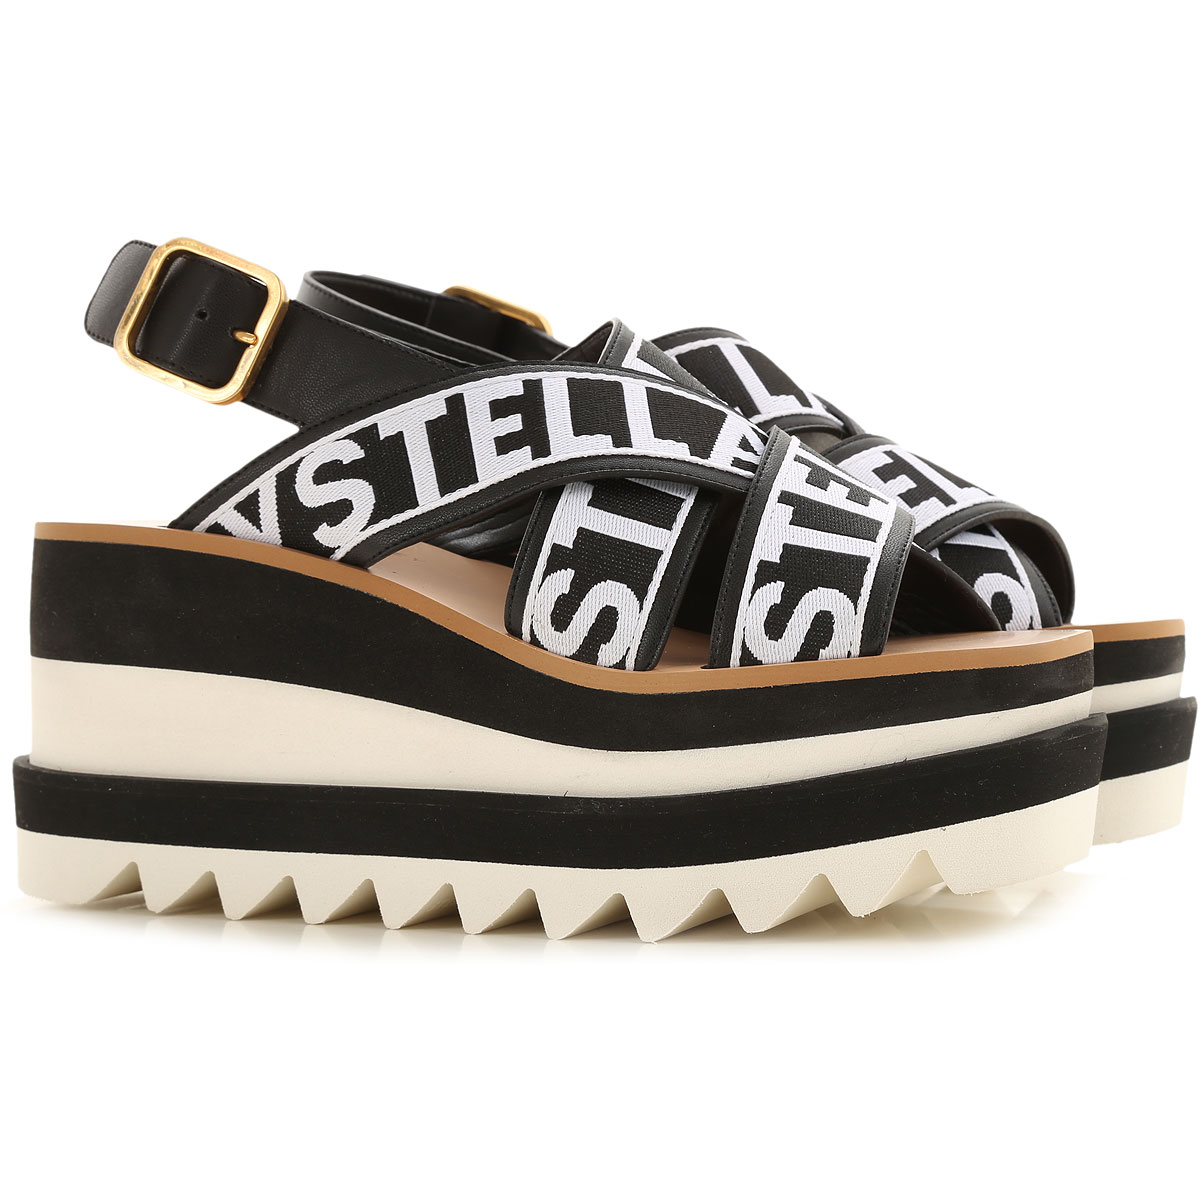 Womens Shoes Stella McCartney, Style code: 800129-n0078-k105